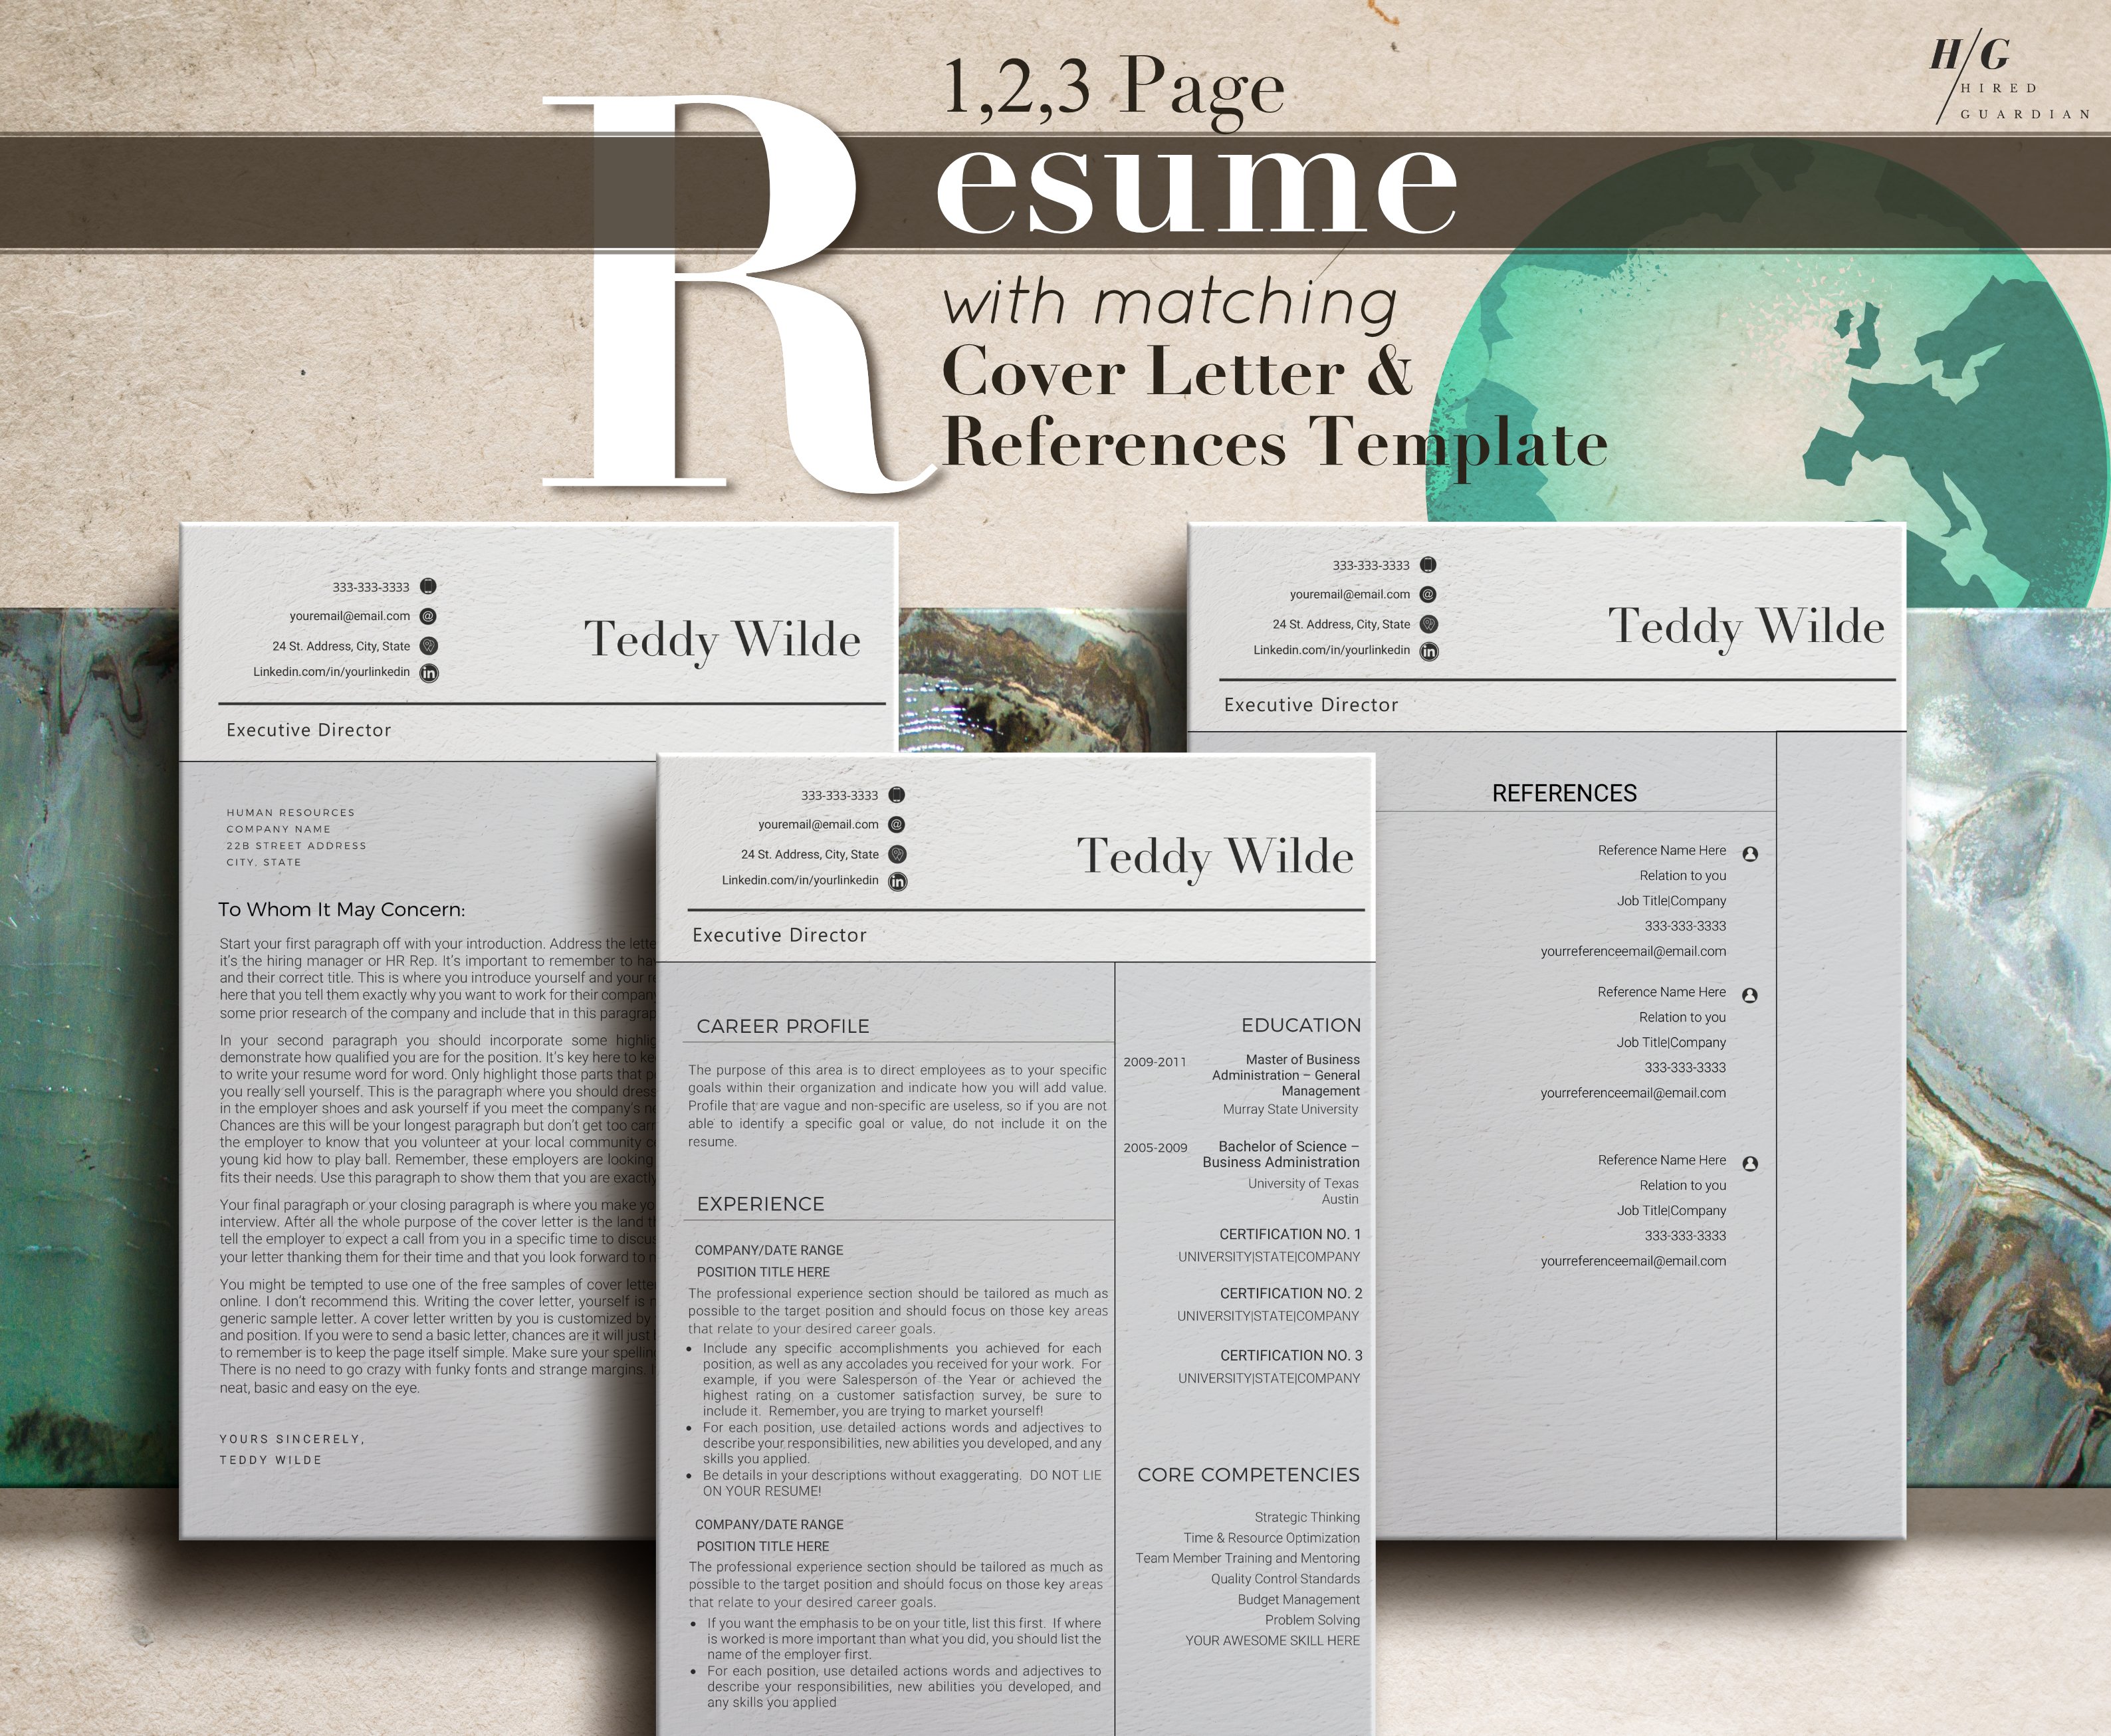 5 3 page resume template lebenslauf vorlage resume template with cover letter resume copy copy copy copy copy 4 36